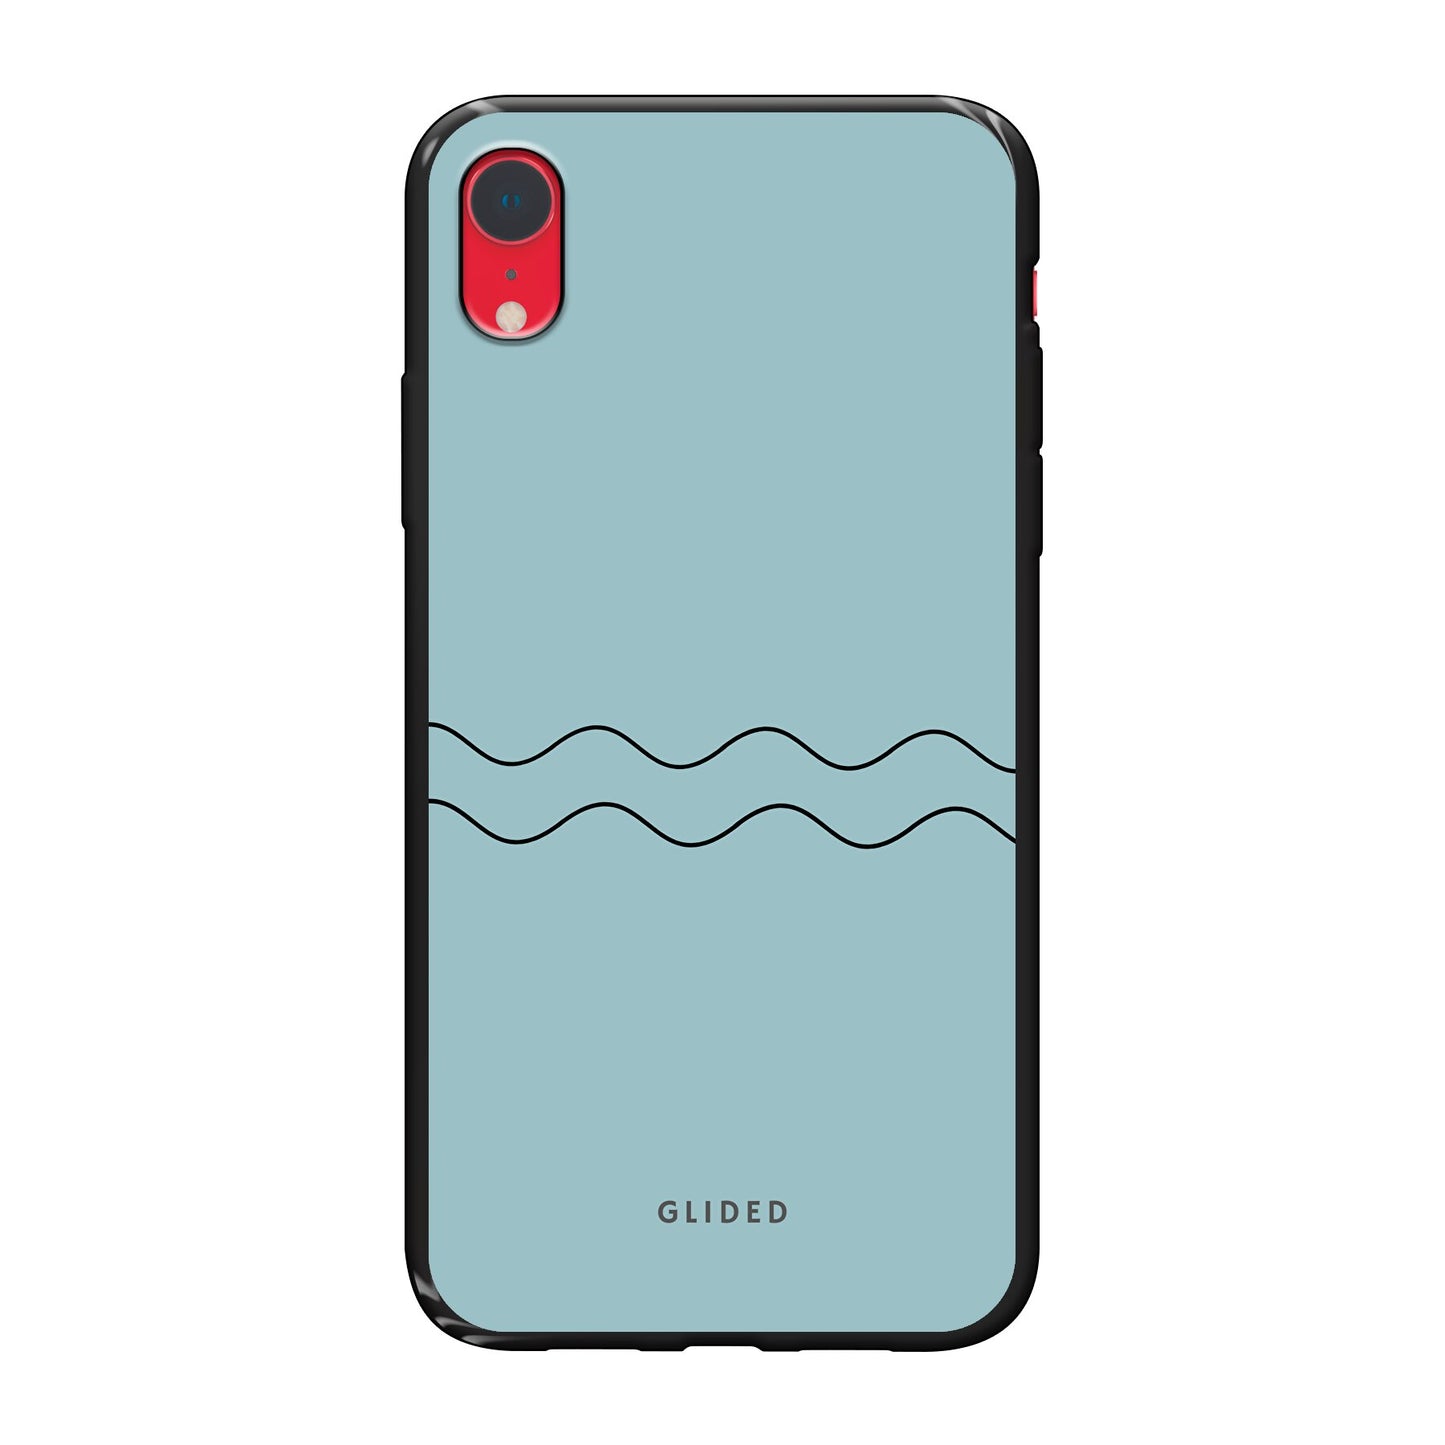 Horizona - iPhone XR Handyhülle Soft case